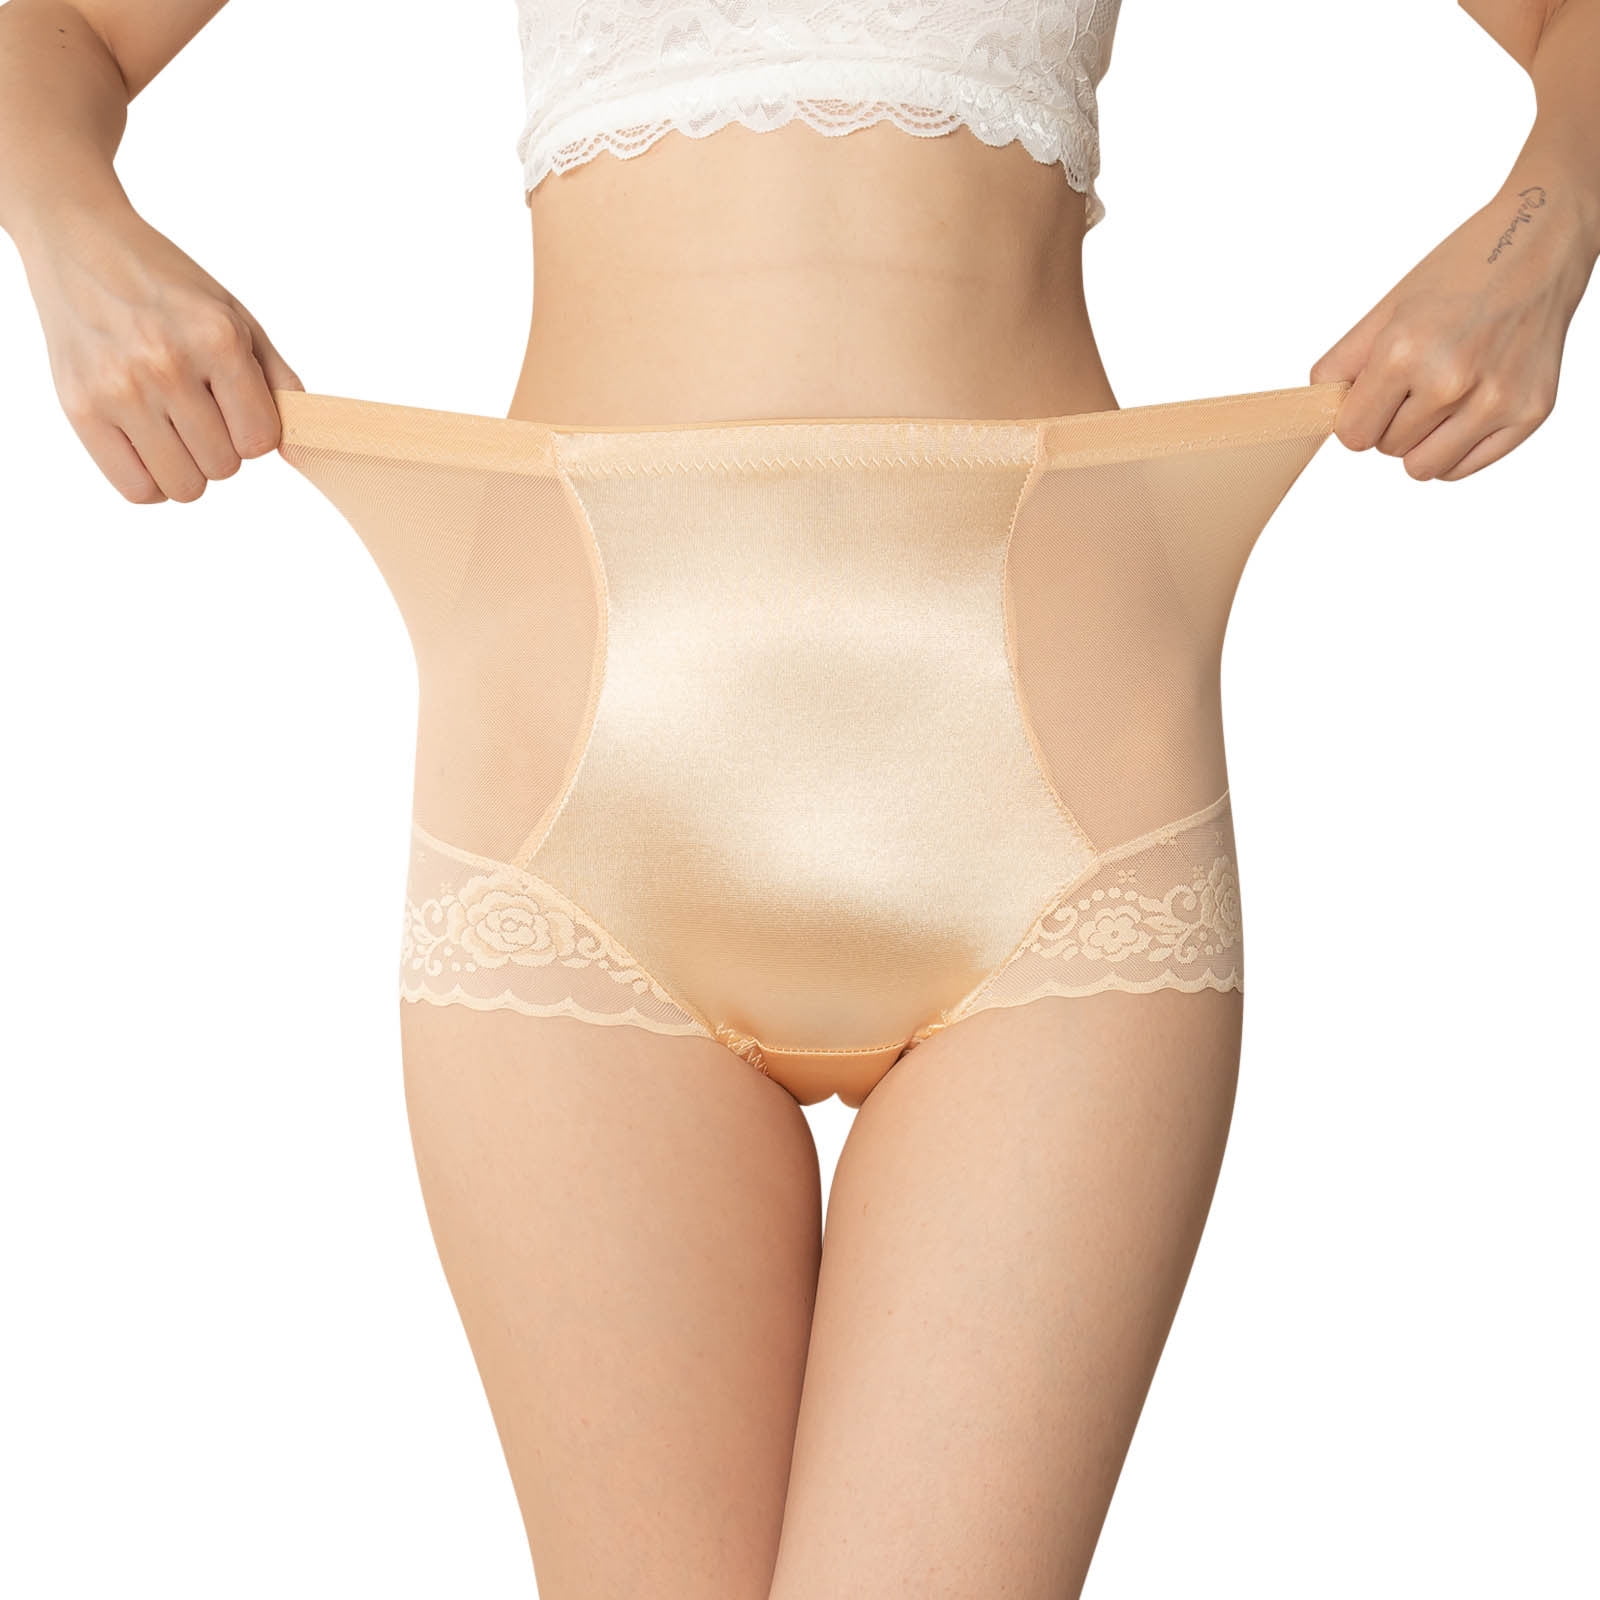 adviicd Nylon Panties for Women Teen Girls Underwear Cotton Soft